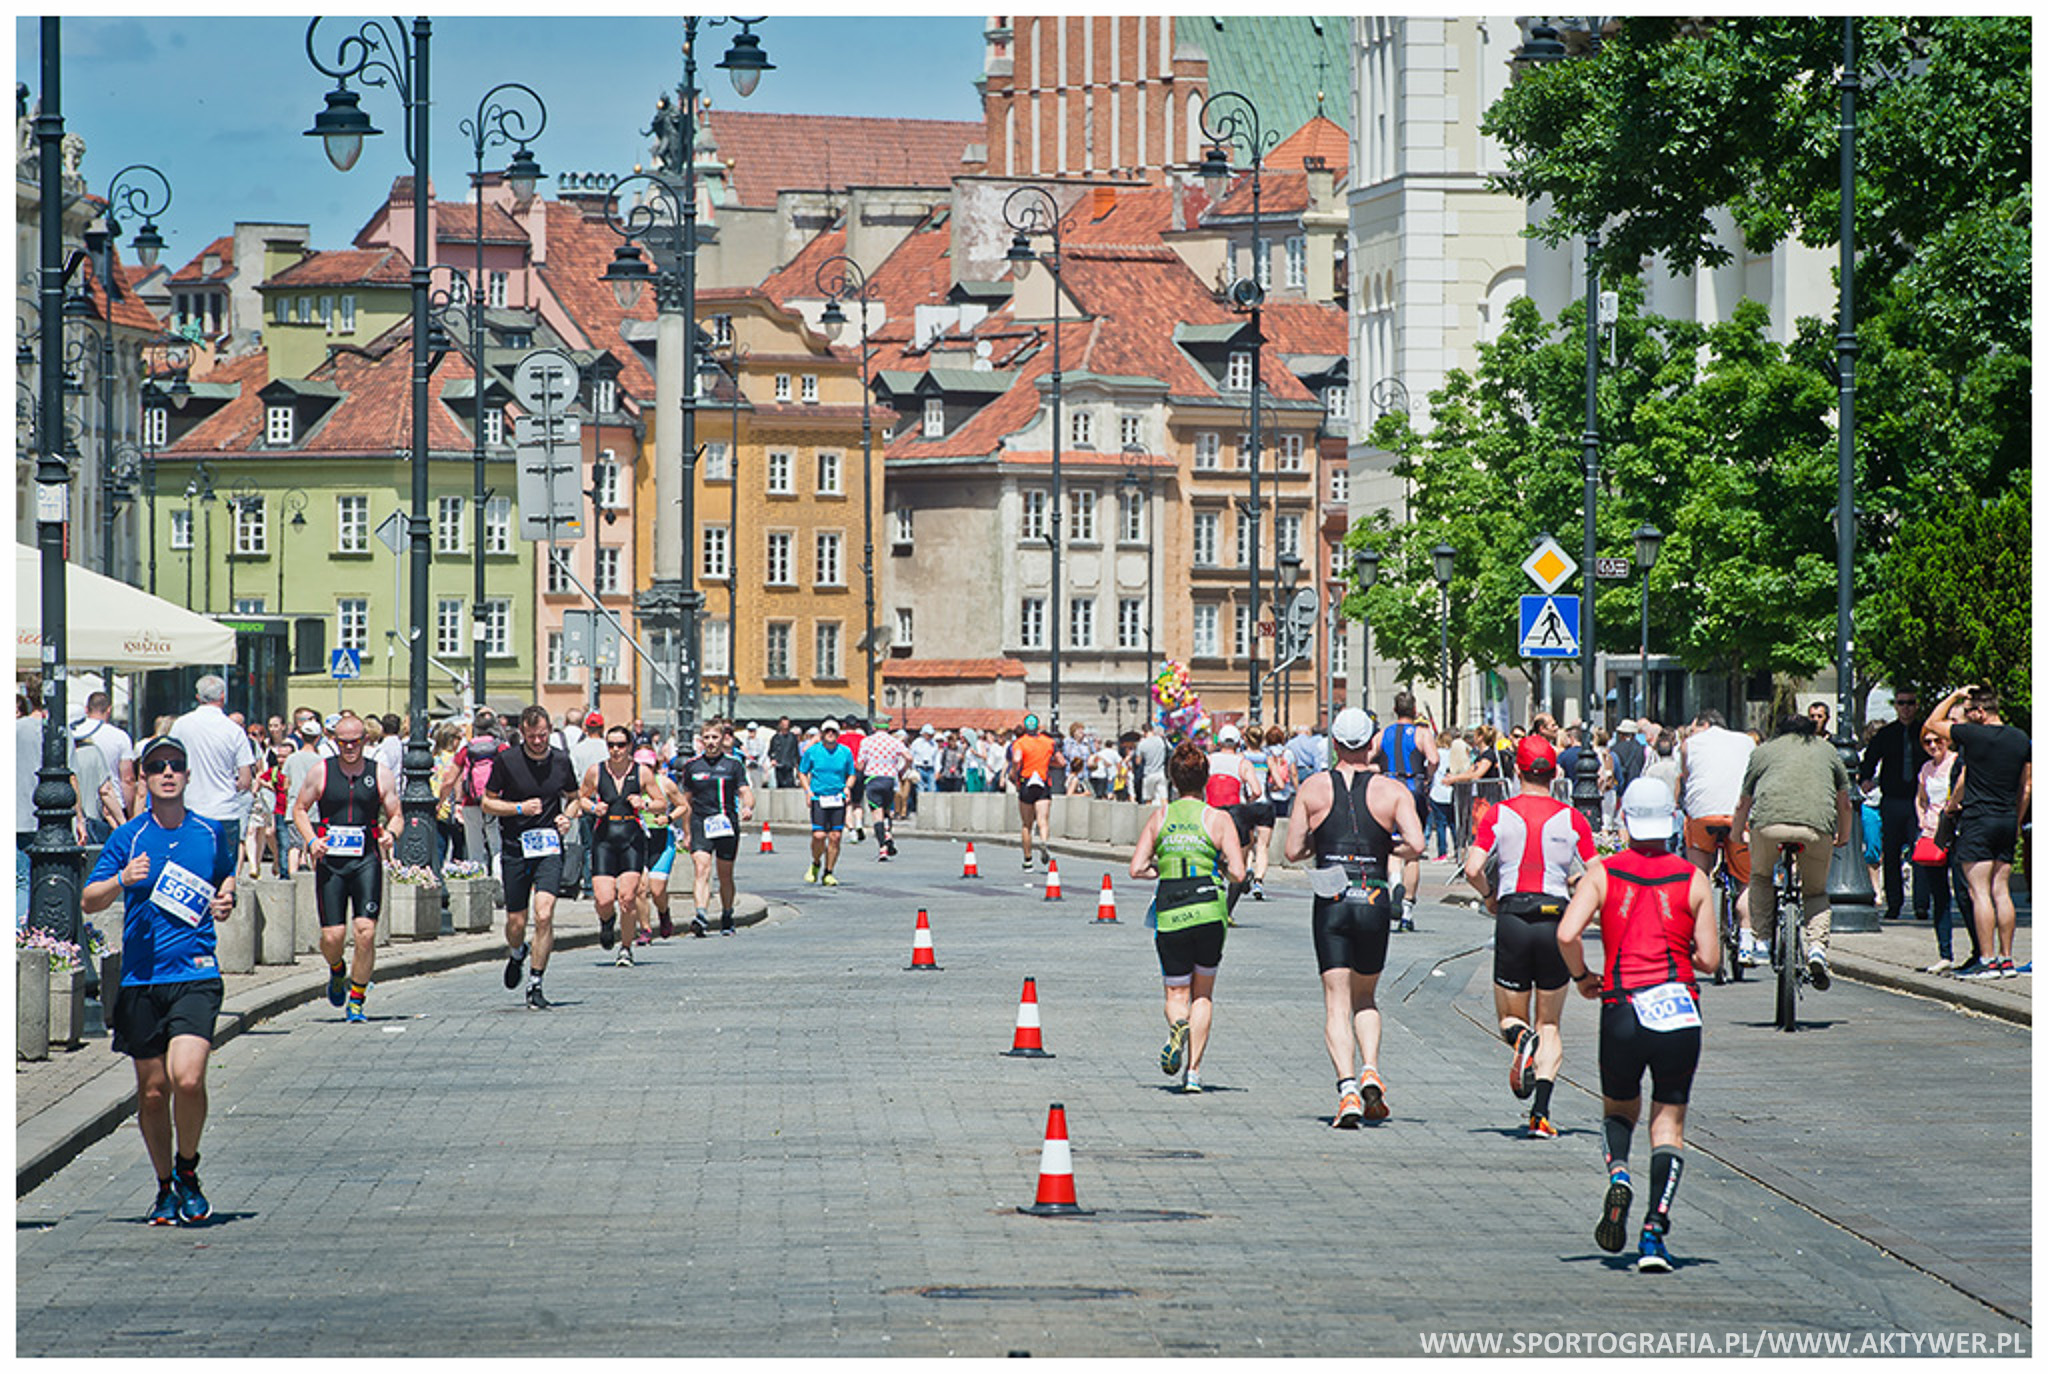 Enea 5150 Warsaw Triathlon, 11.06.2017 Warszawa